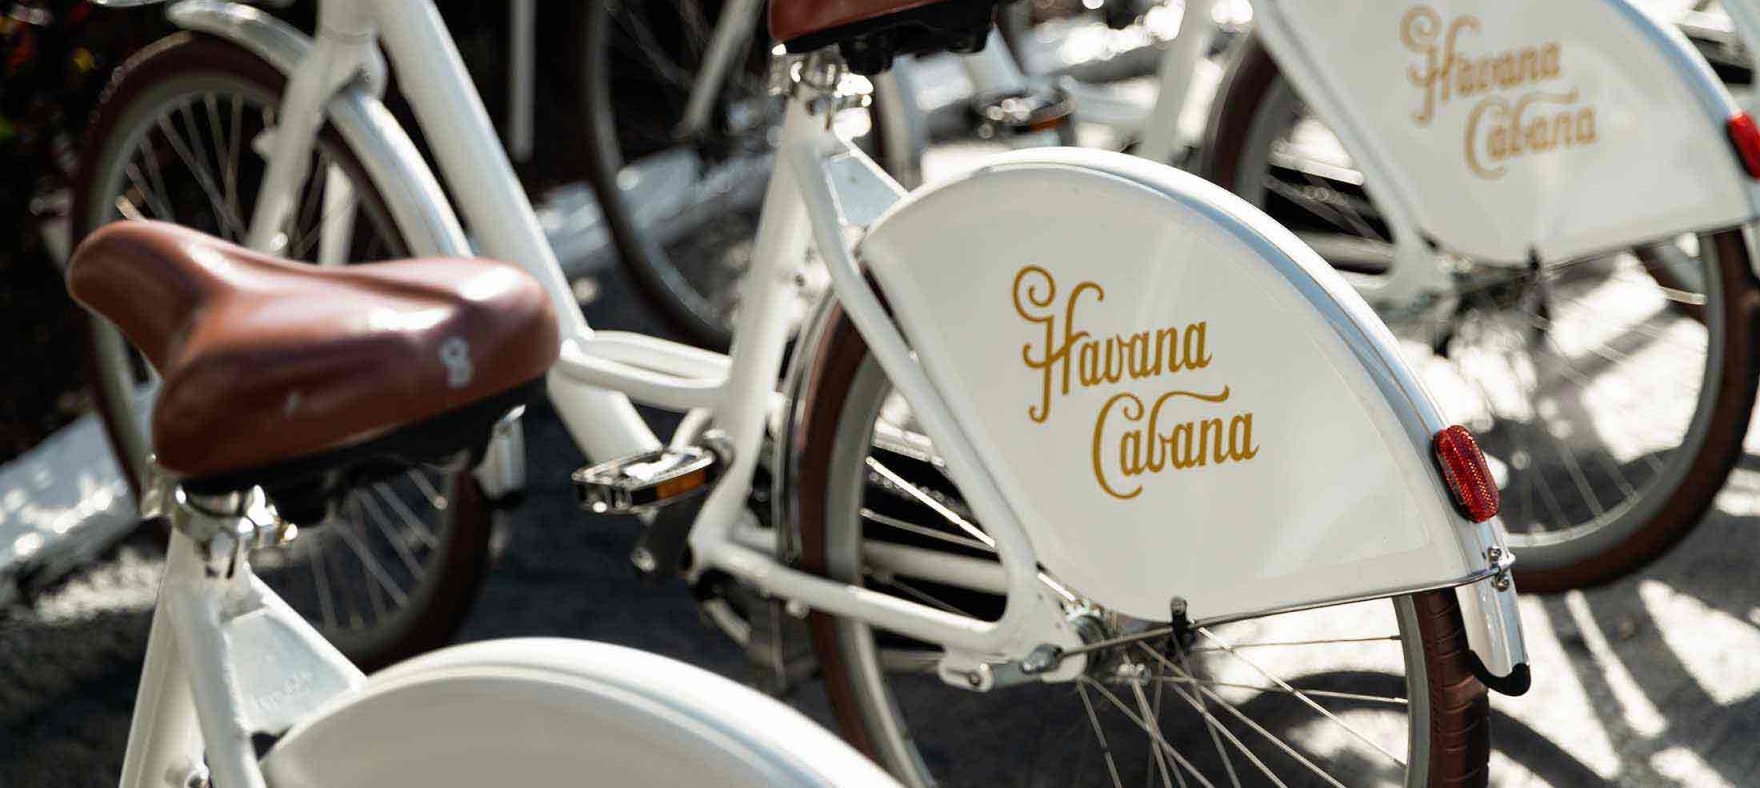 A close focus on the Havana Cabana logo on the top corner of the tire